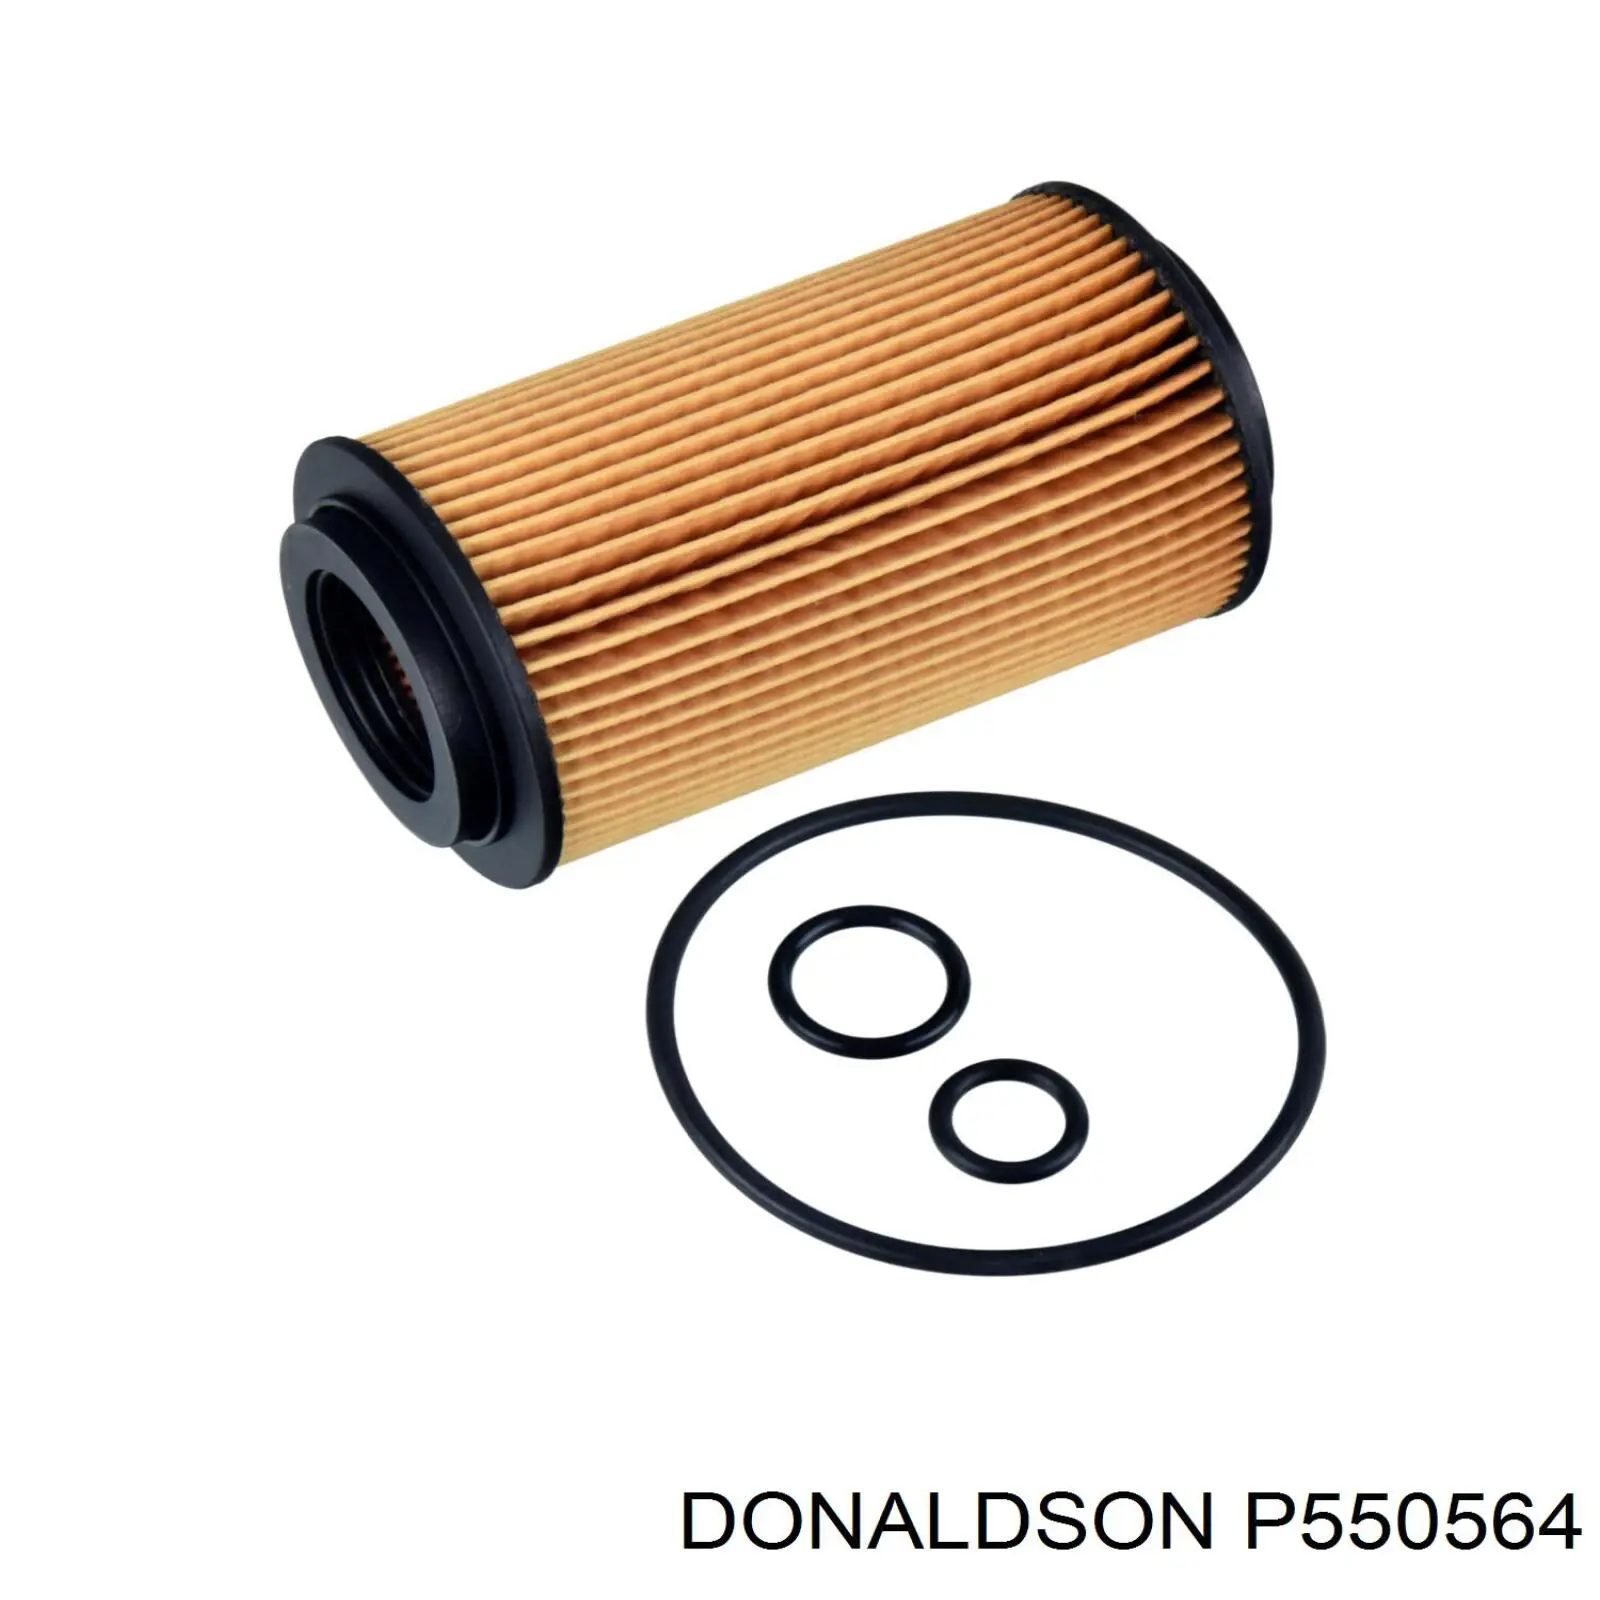 P550564 Donaldson filtro de aceite